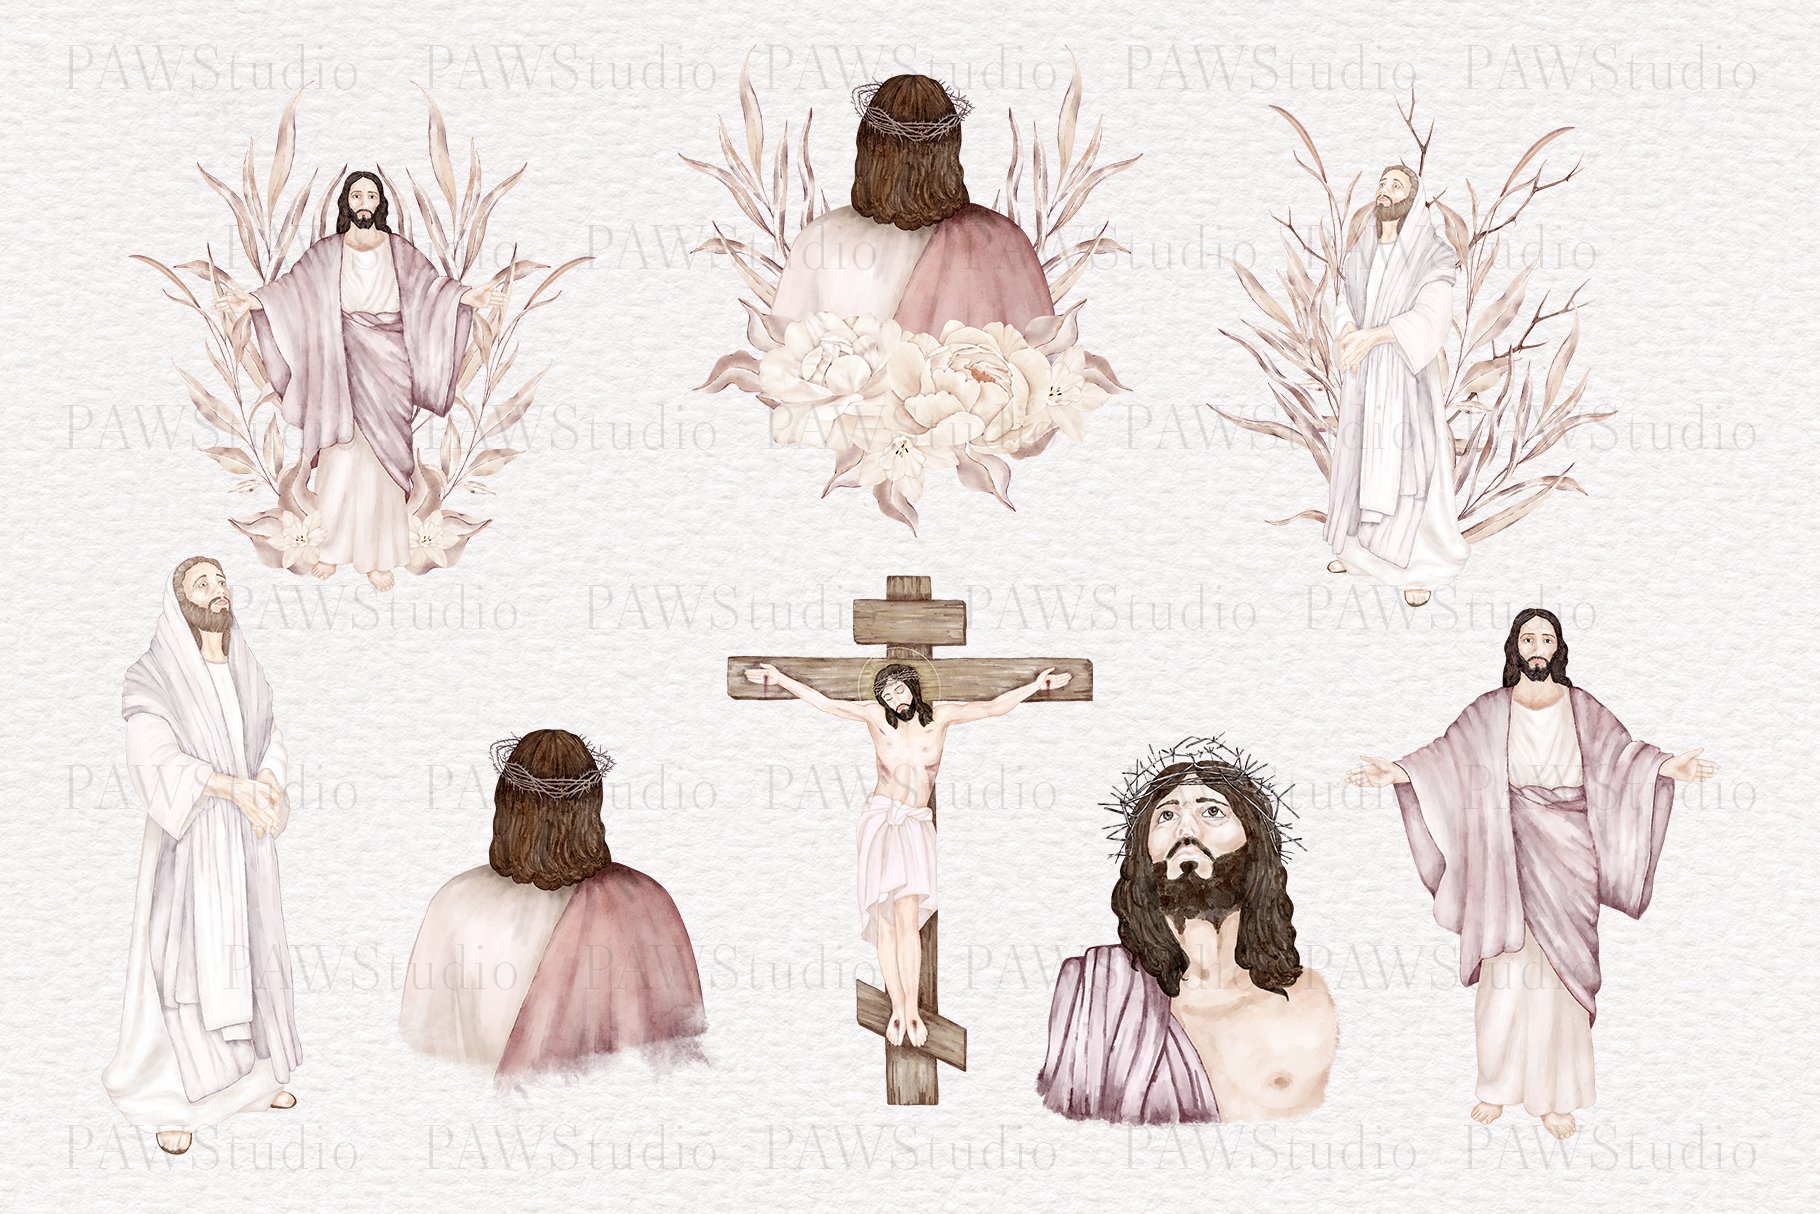 Some pastel Jesus compositions.